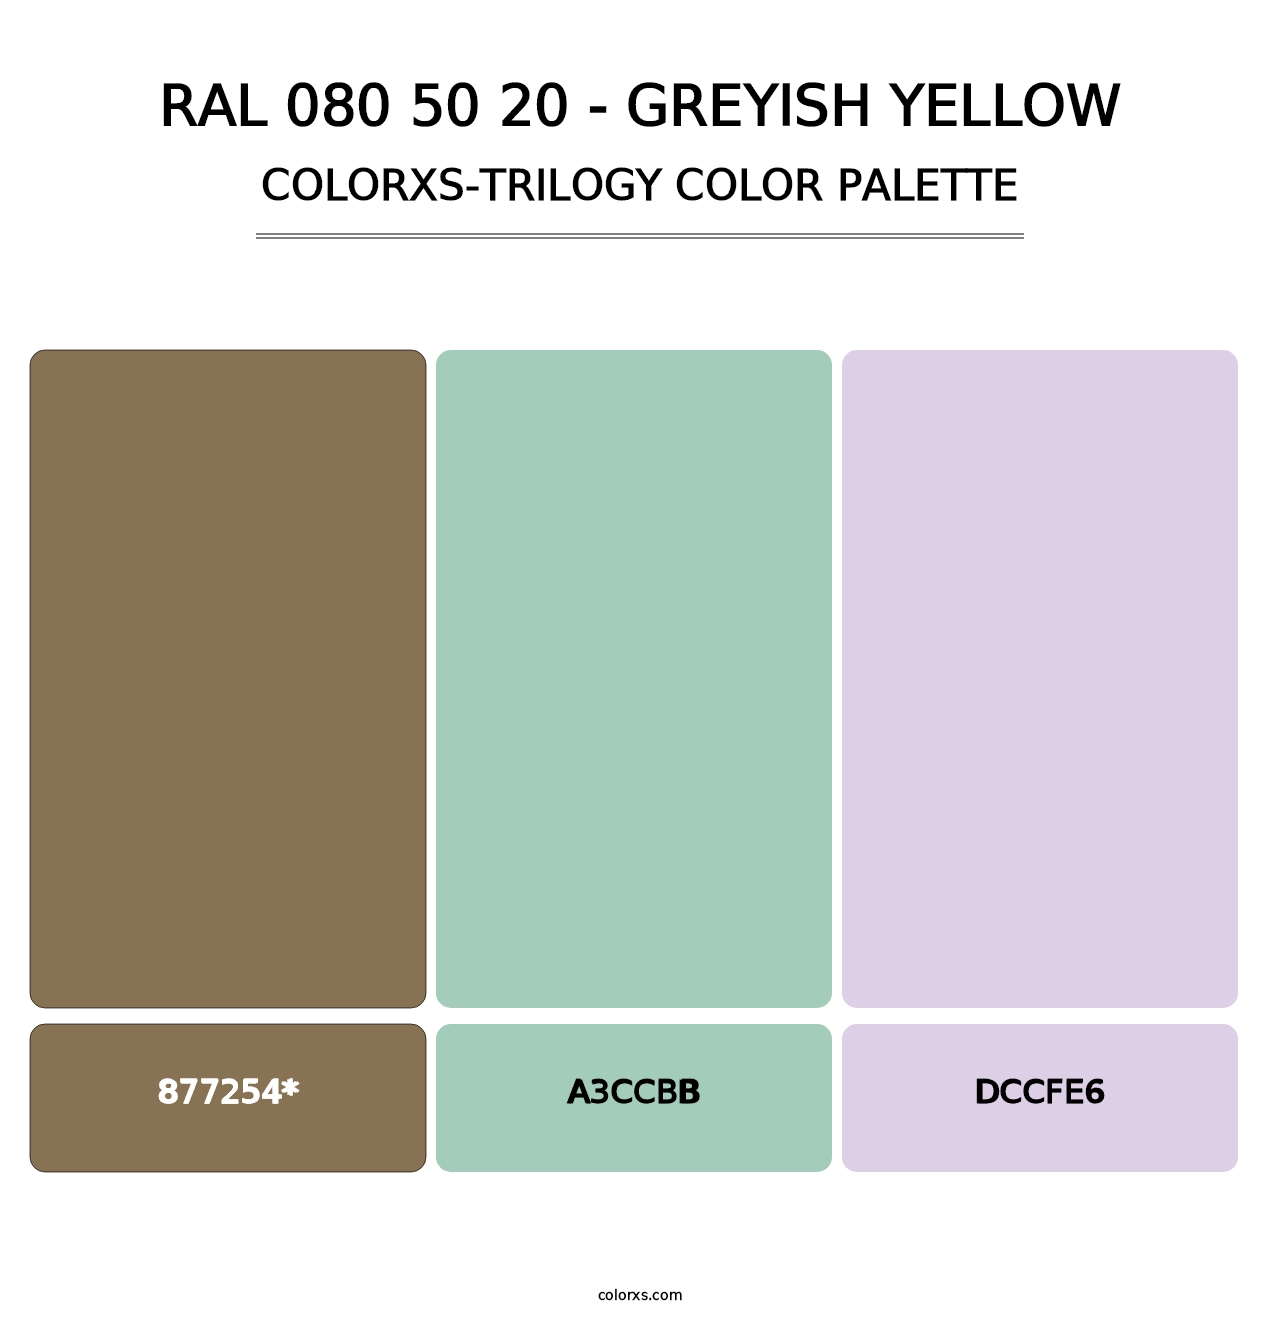 RAL 080 50 20 - Greyish Yellow - Colorxs Trilogy Palette